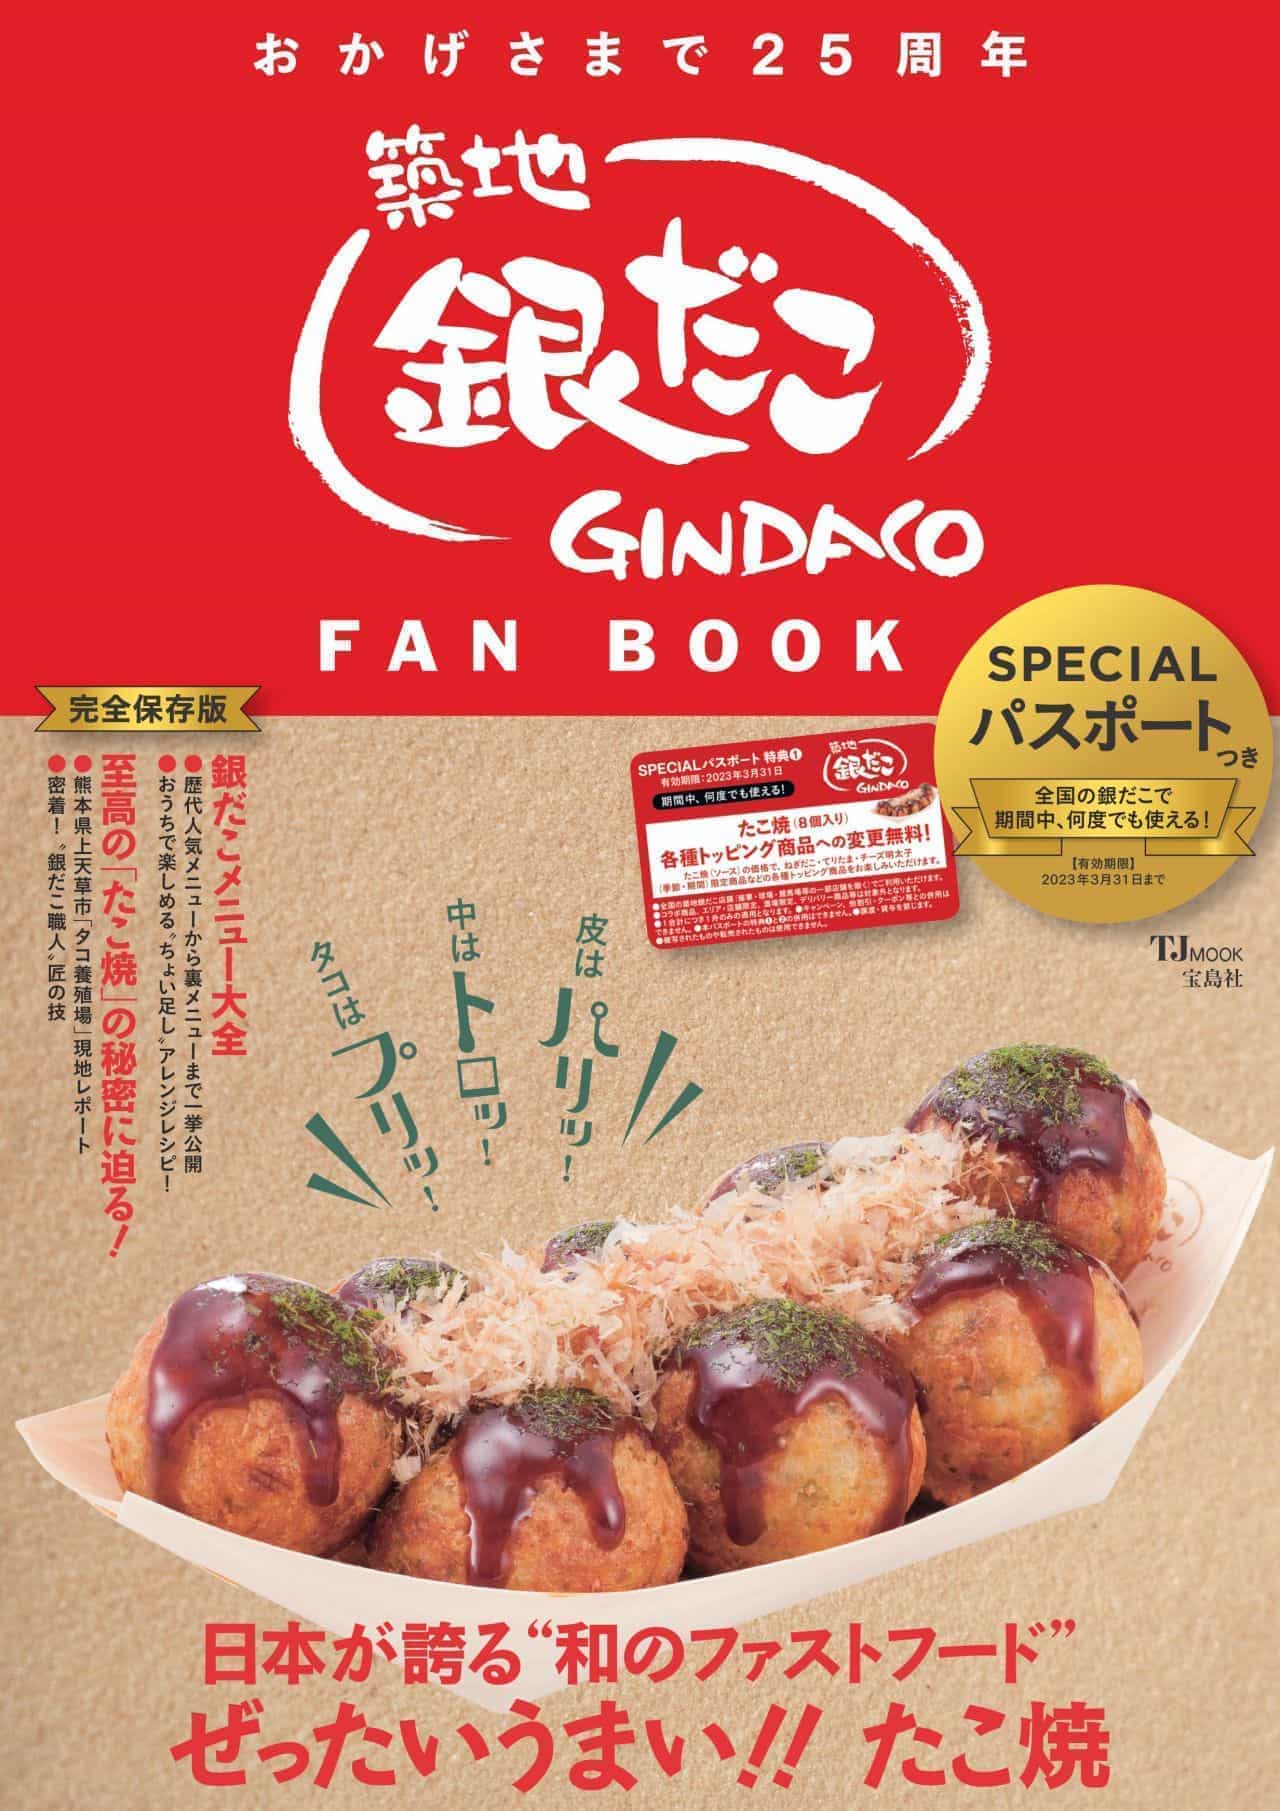 Tsukiji Gindako FAN BOOK